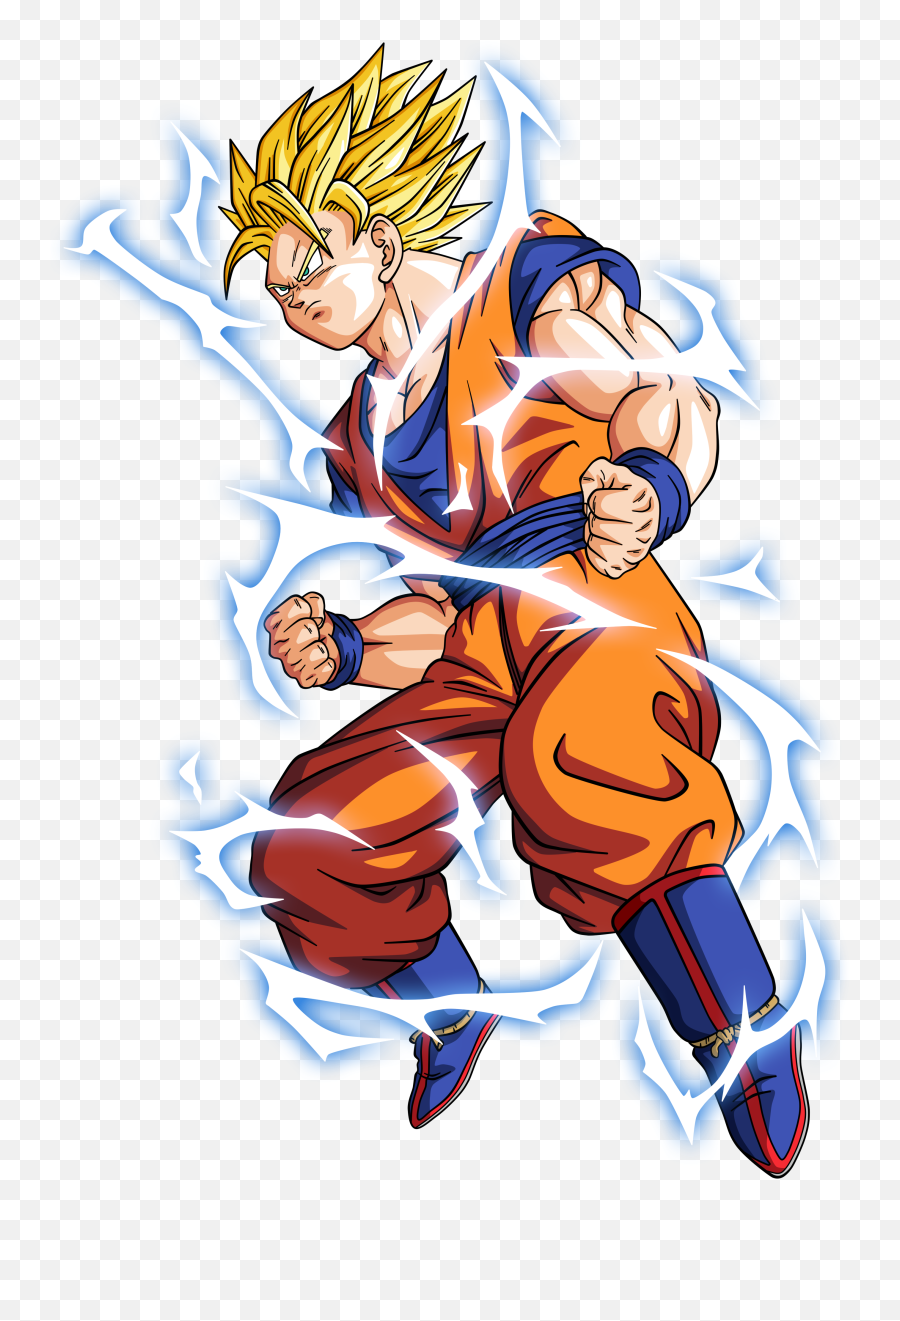 Download Hd Goku Super Saiyan 2 By Bardocksonic - D73adde Dragon Ball Goku Super Saiyan Png,Goku Transparent Background